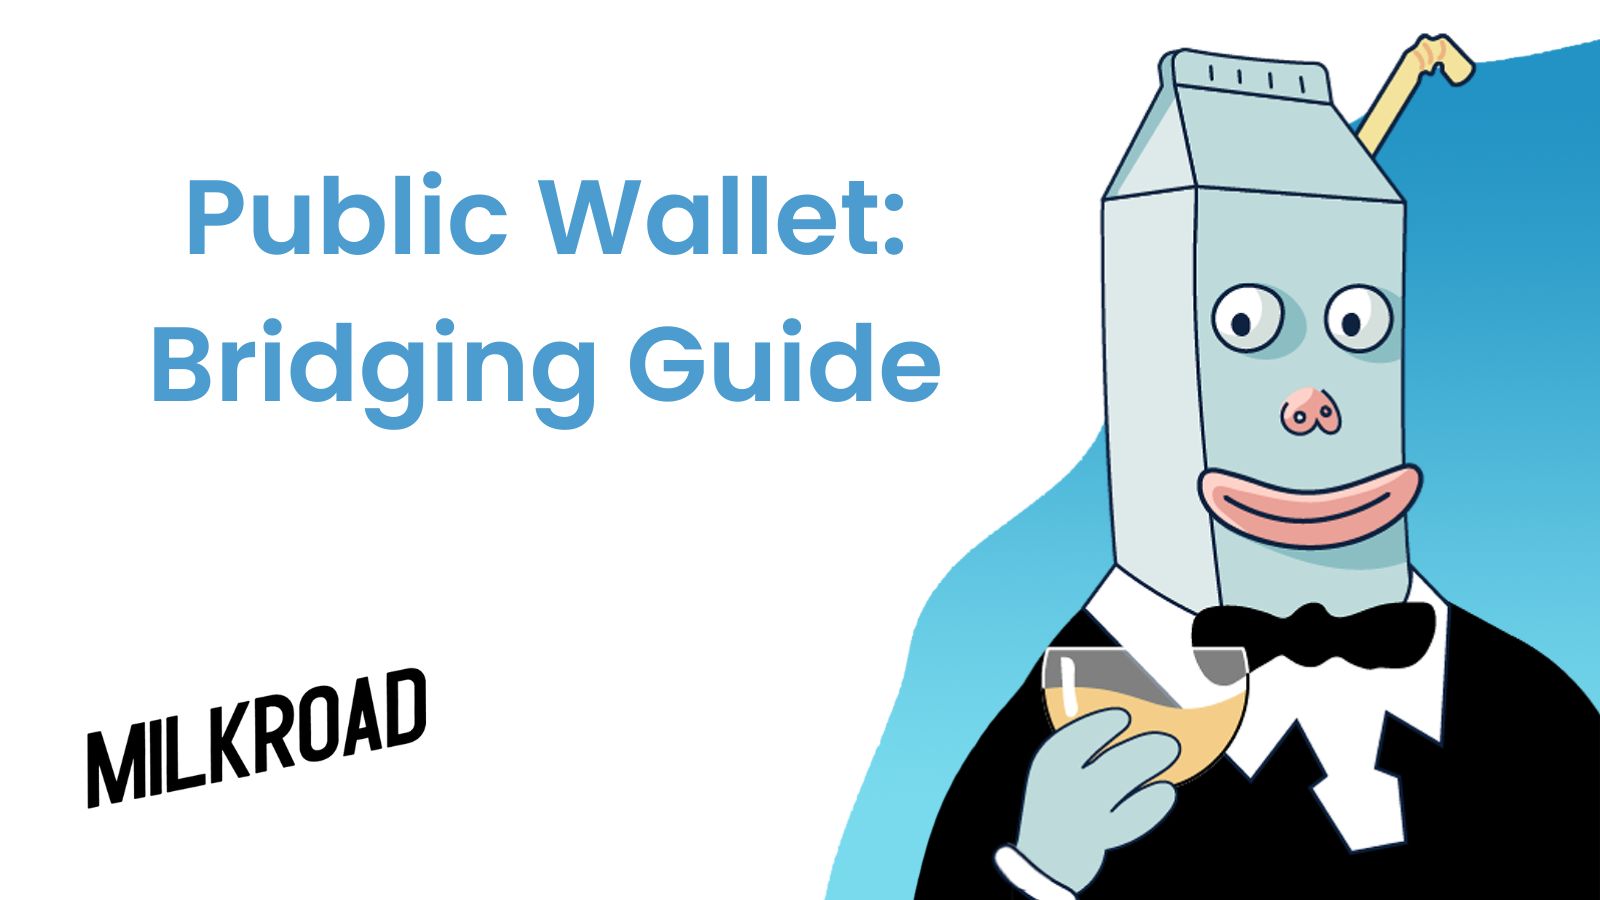 Public Wallet: Bridging Guide